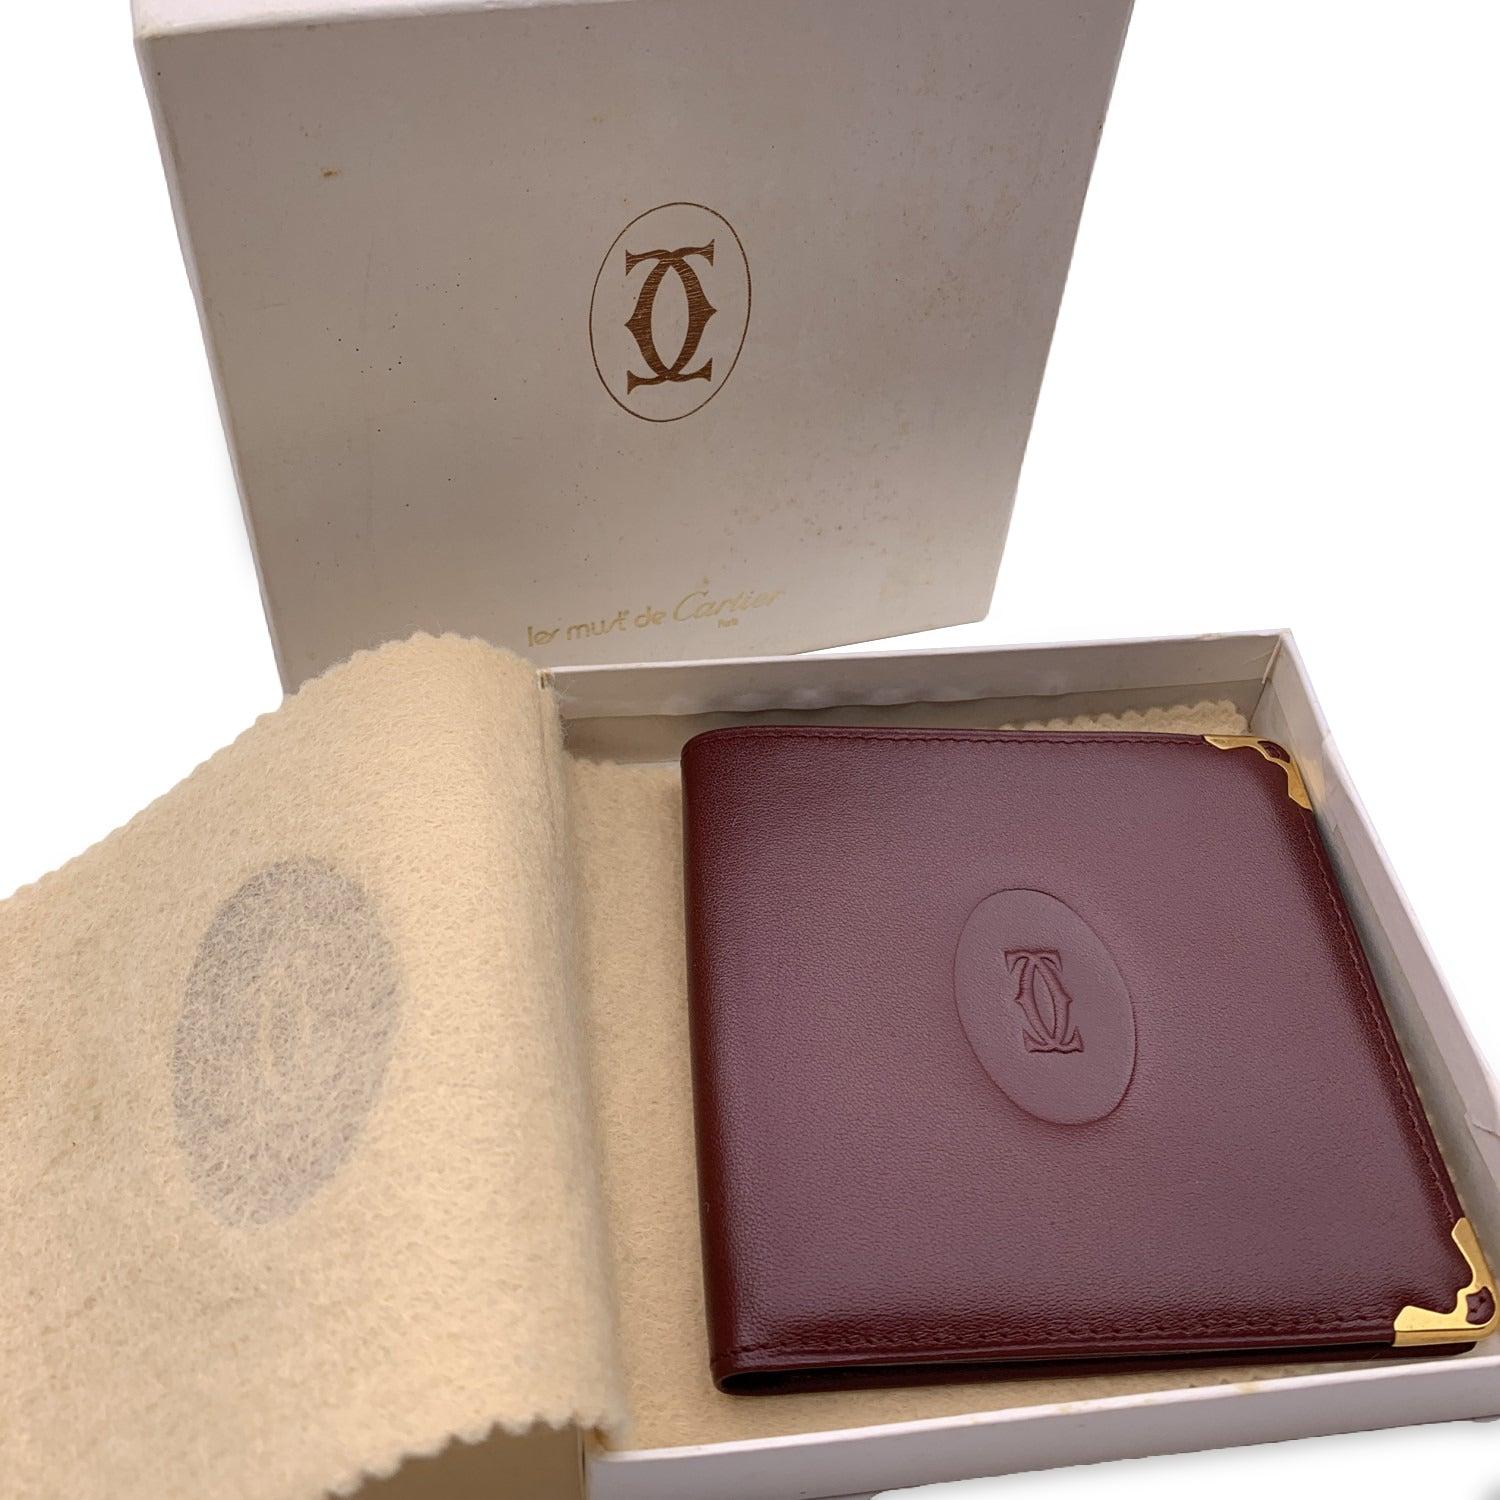 Vintage Cartier wallet in burgundy leather. Bifold design. 1 bill compartment, 1 slot for a checkbook. Cartier logo embossed on the front. Leather lined. 'Cartier Paris' embossed inside. Details MATERIAL: Leather COLOR: Burgundy MODEL: - GENDER: